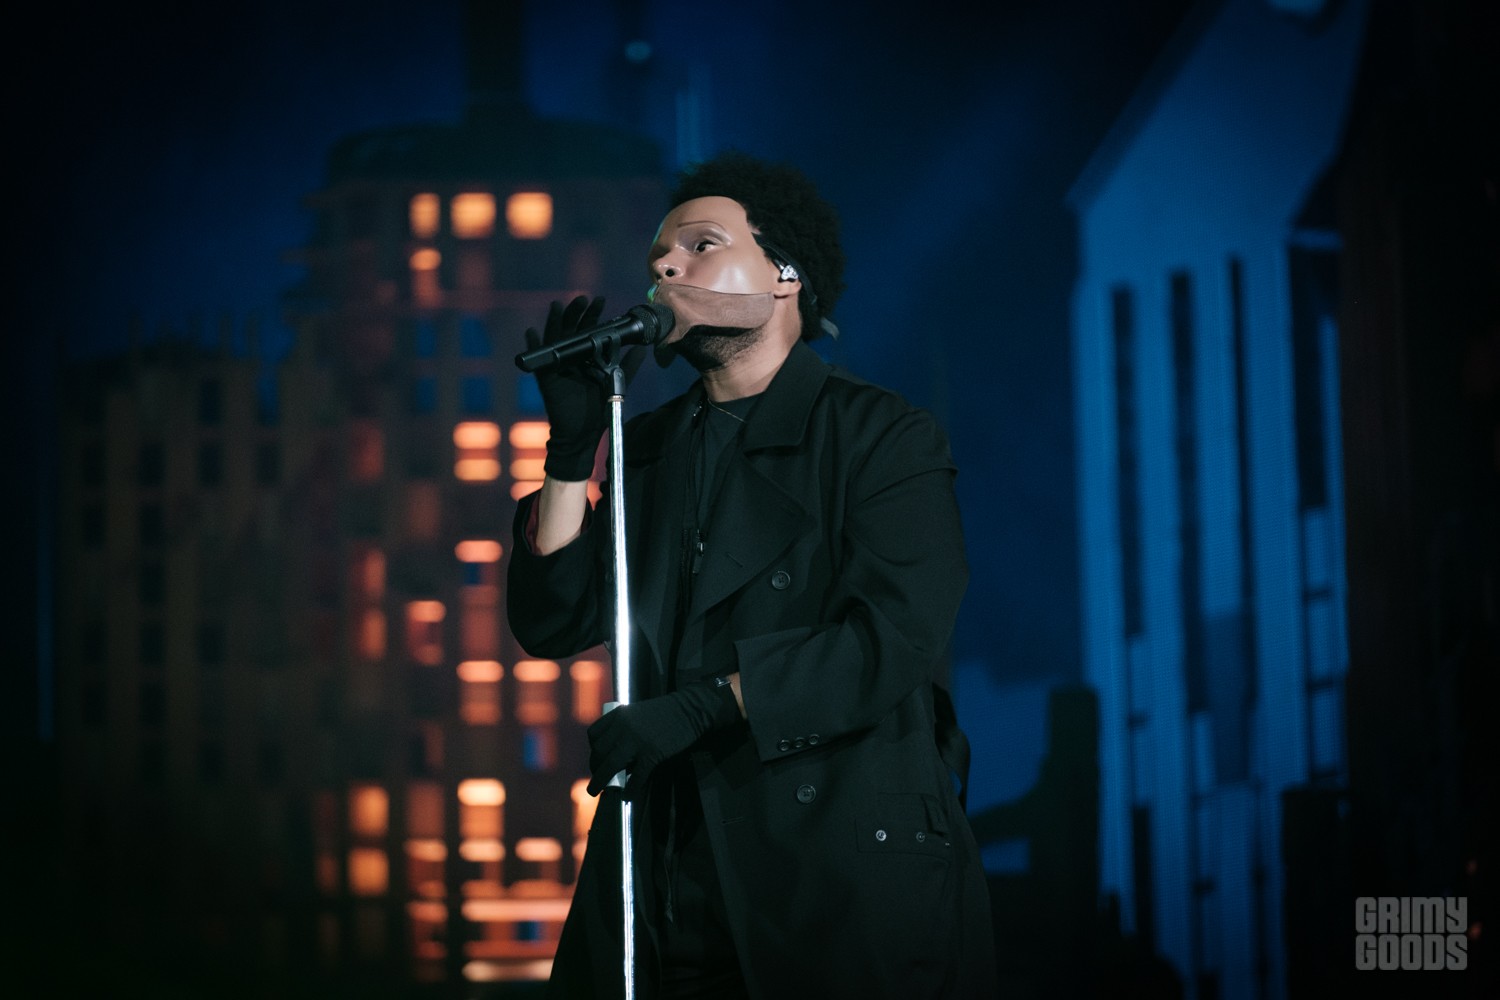 The Weeknd at SoFi Stadium - photo by Bryan Olinger